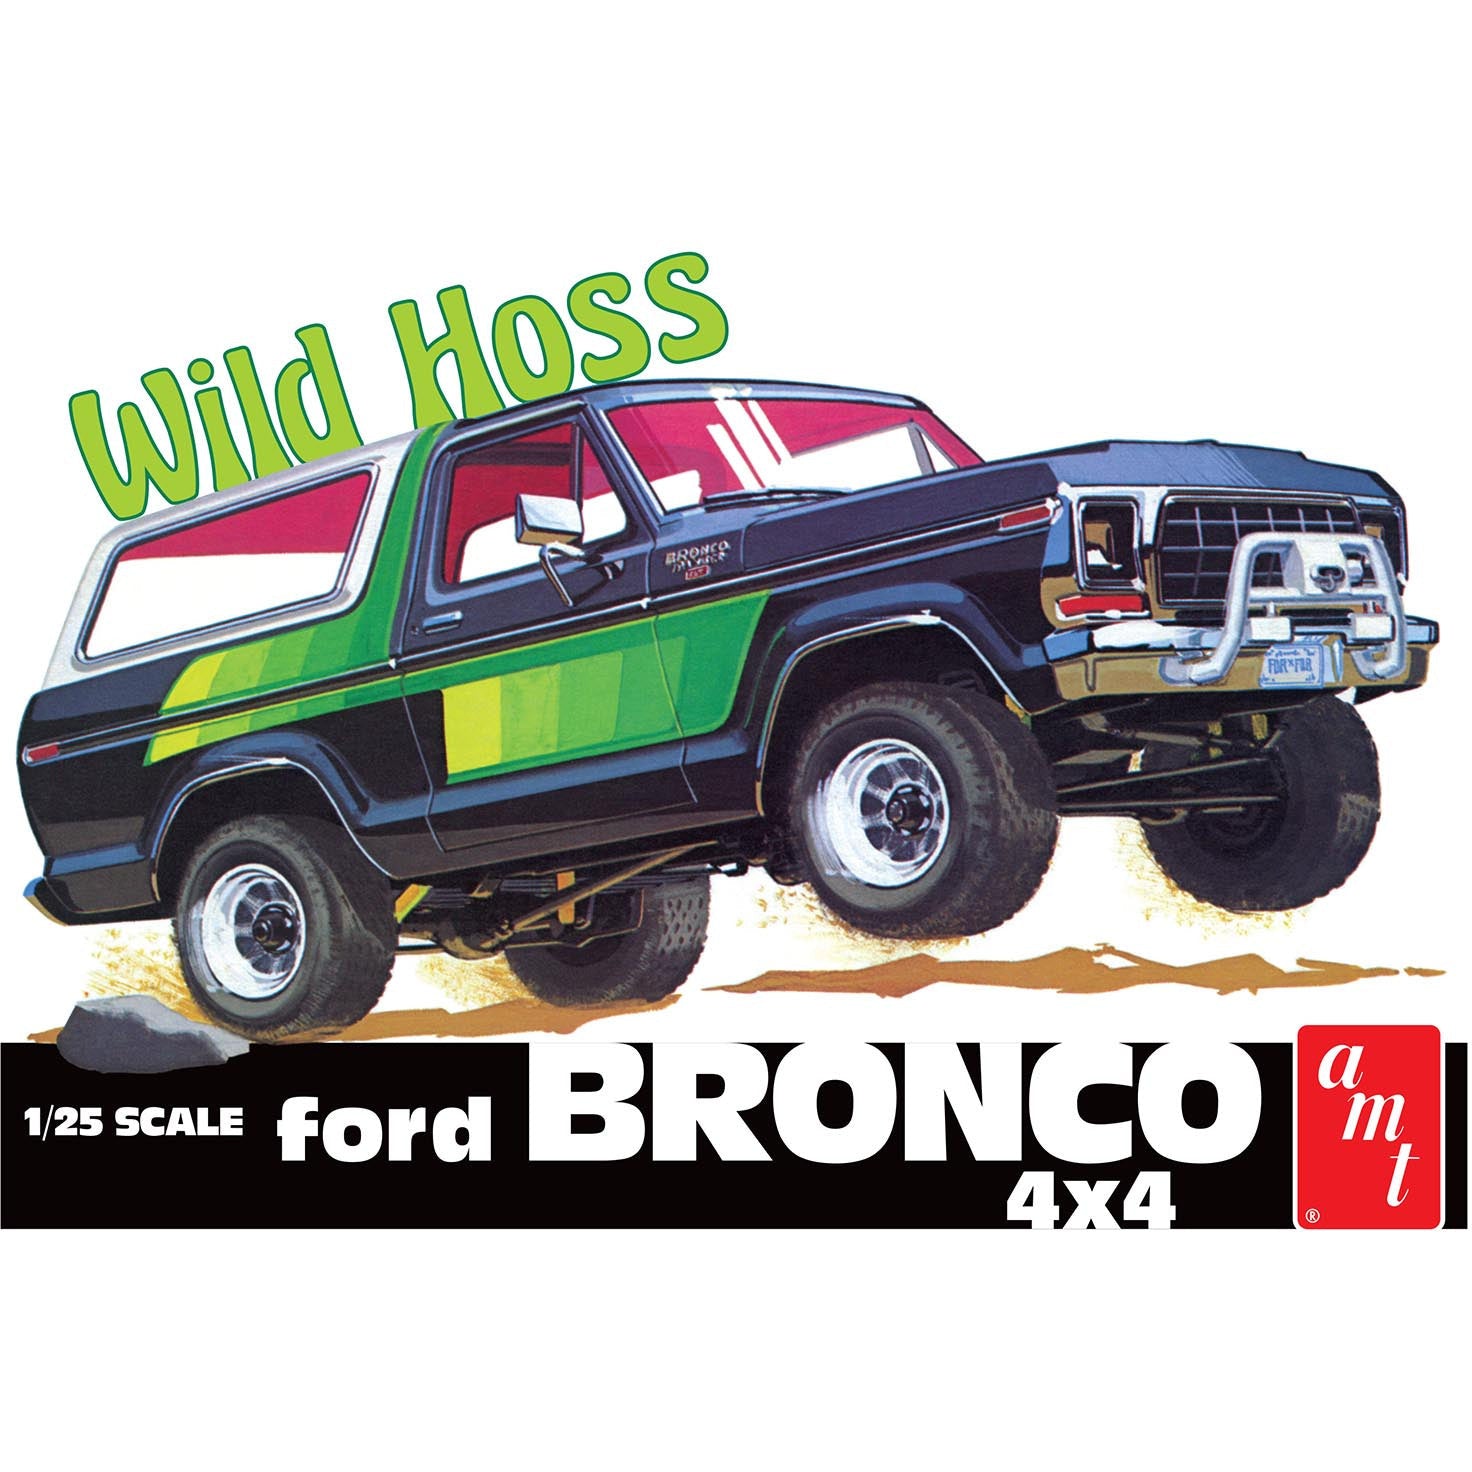 1978 Ford Bronco "Wild Hoss" 1/25 Model Car Kit #1304 by AMT